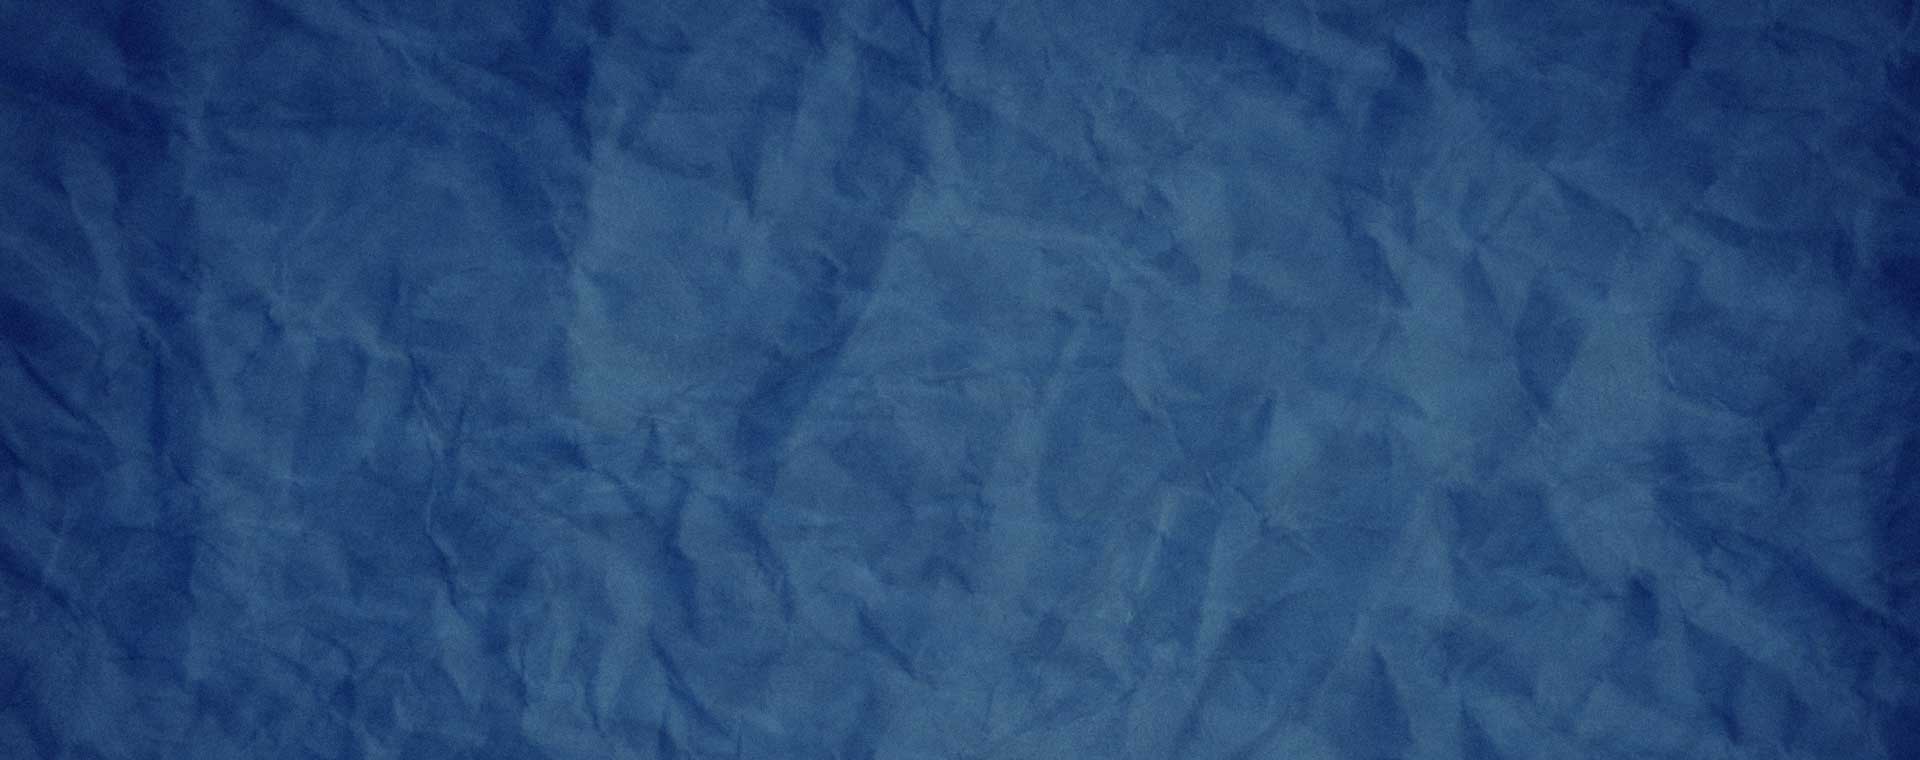 dark blue crumpled paper for background